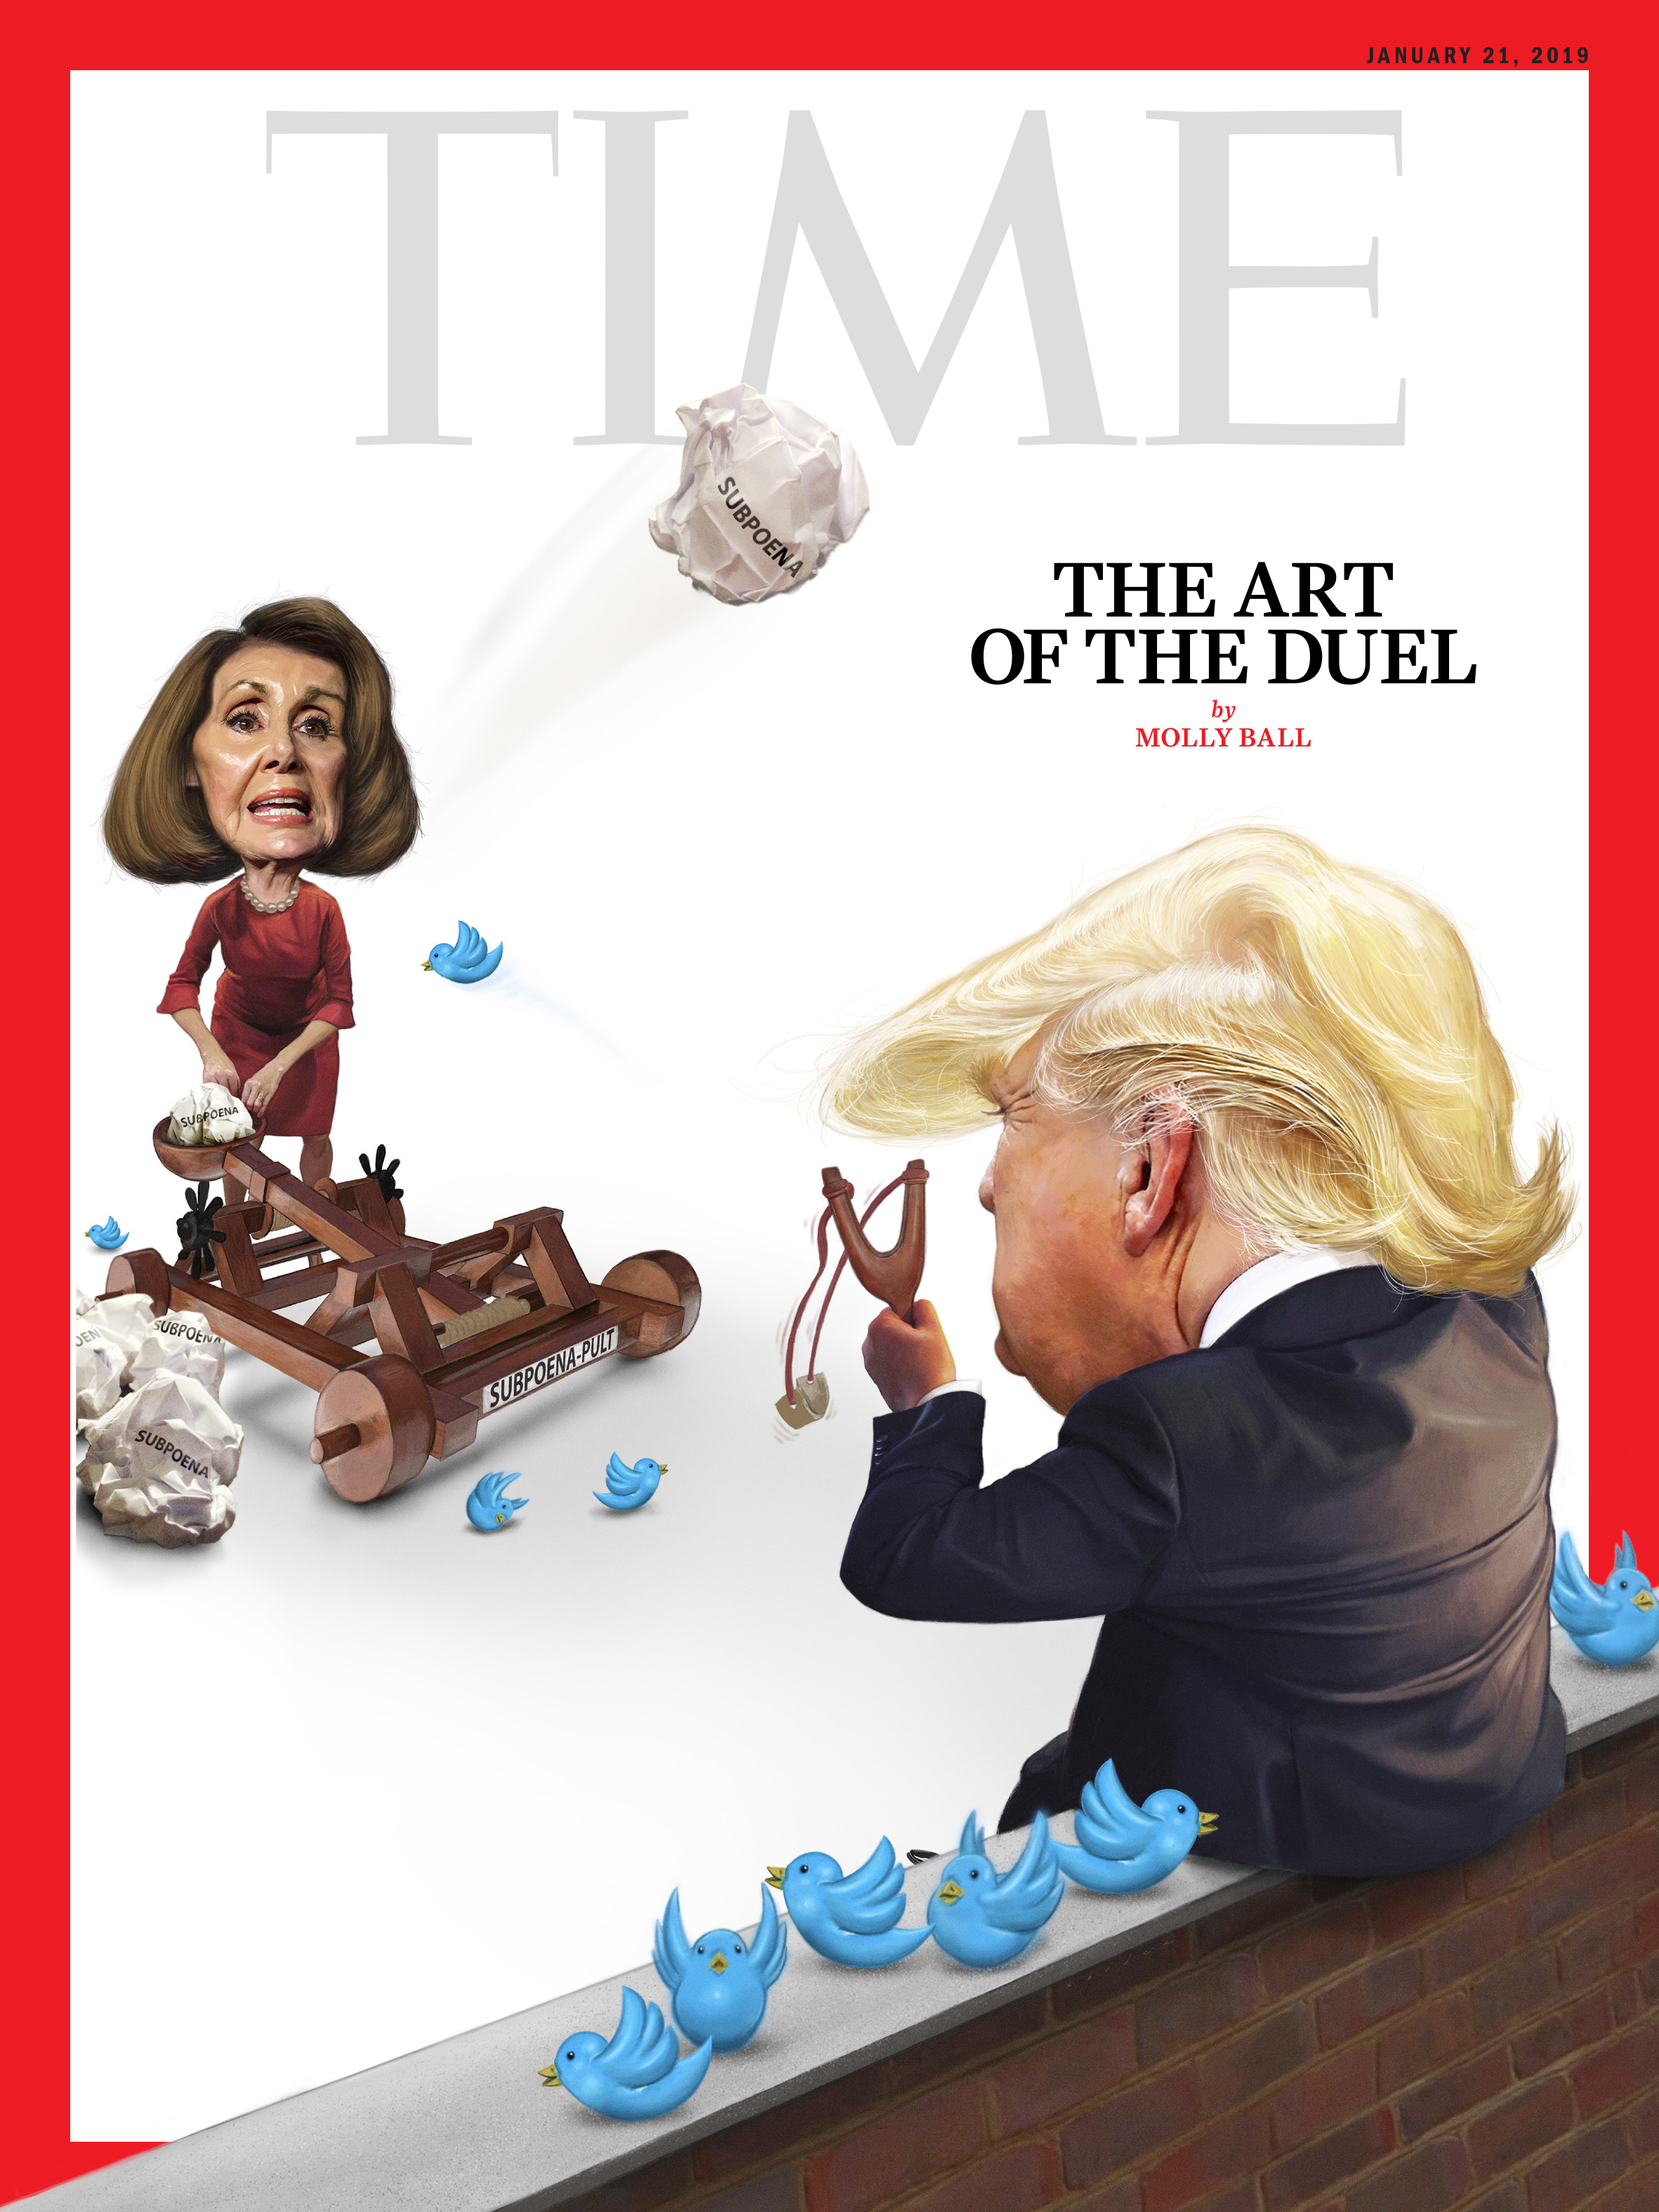 Trump Pelosi Duel Time Magazine Cover